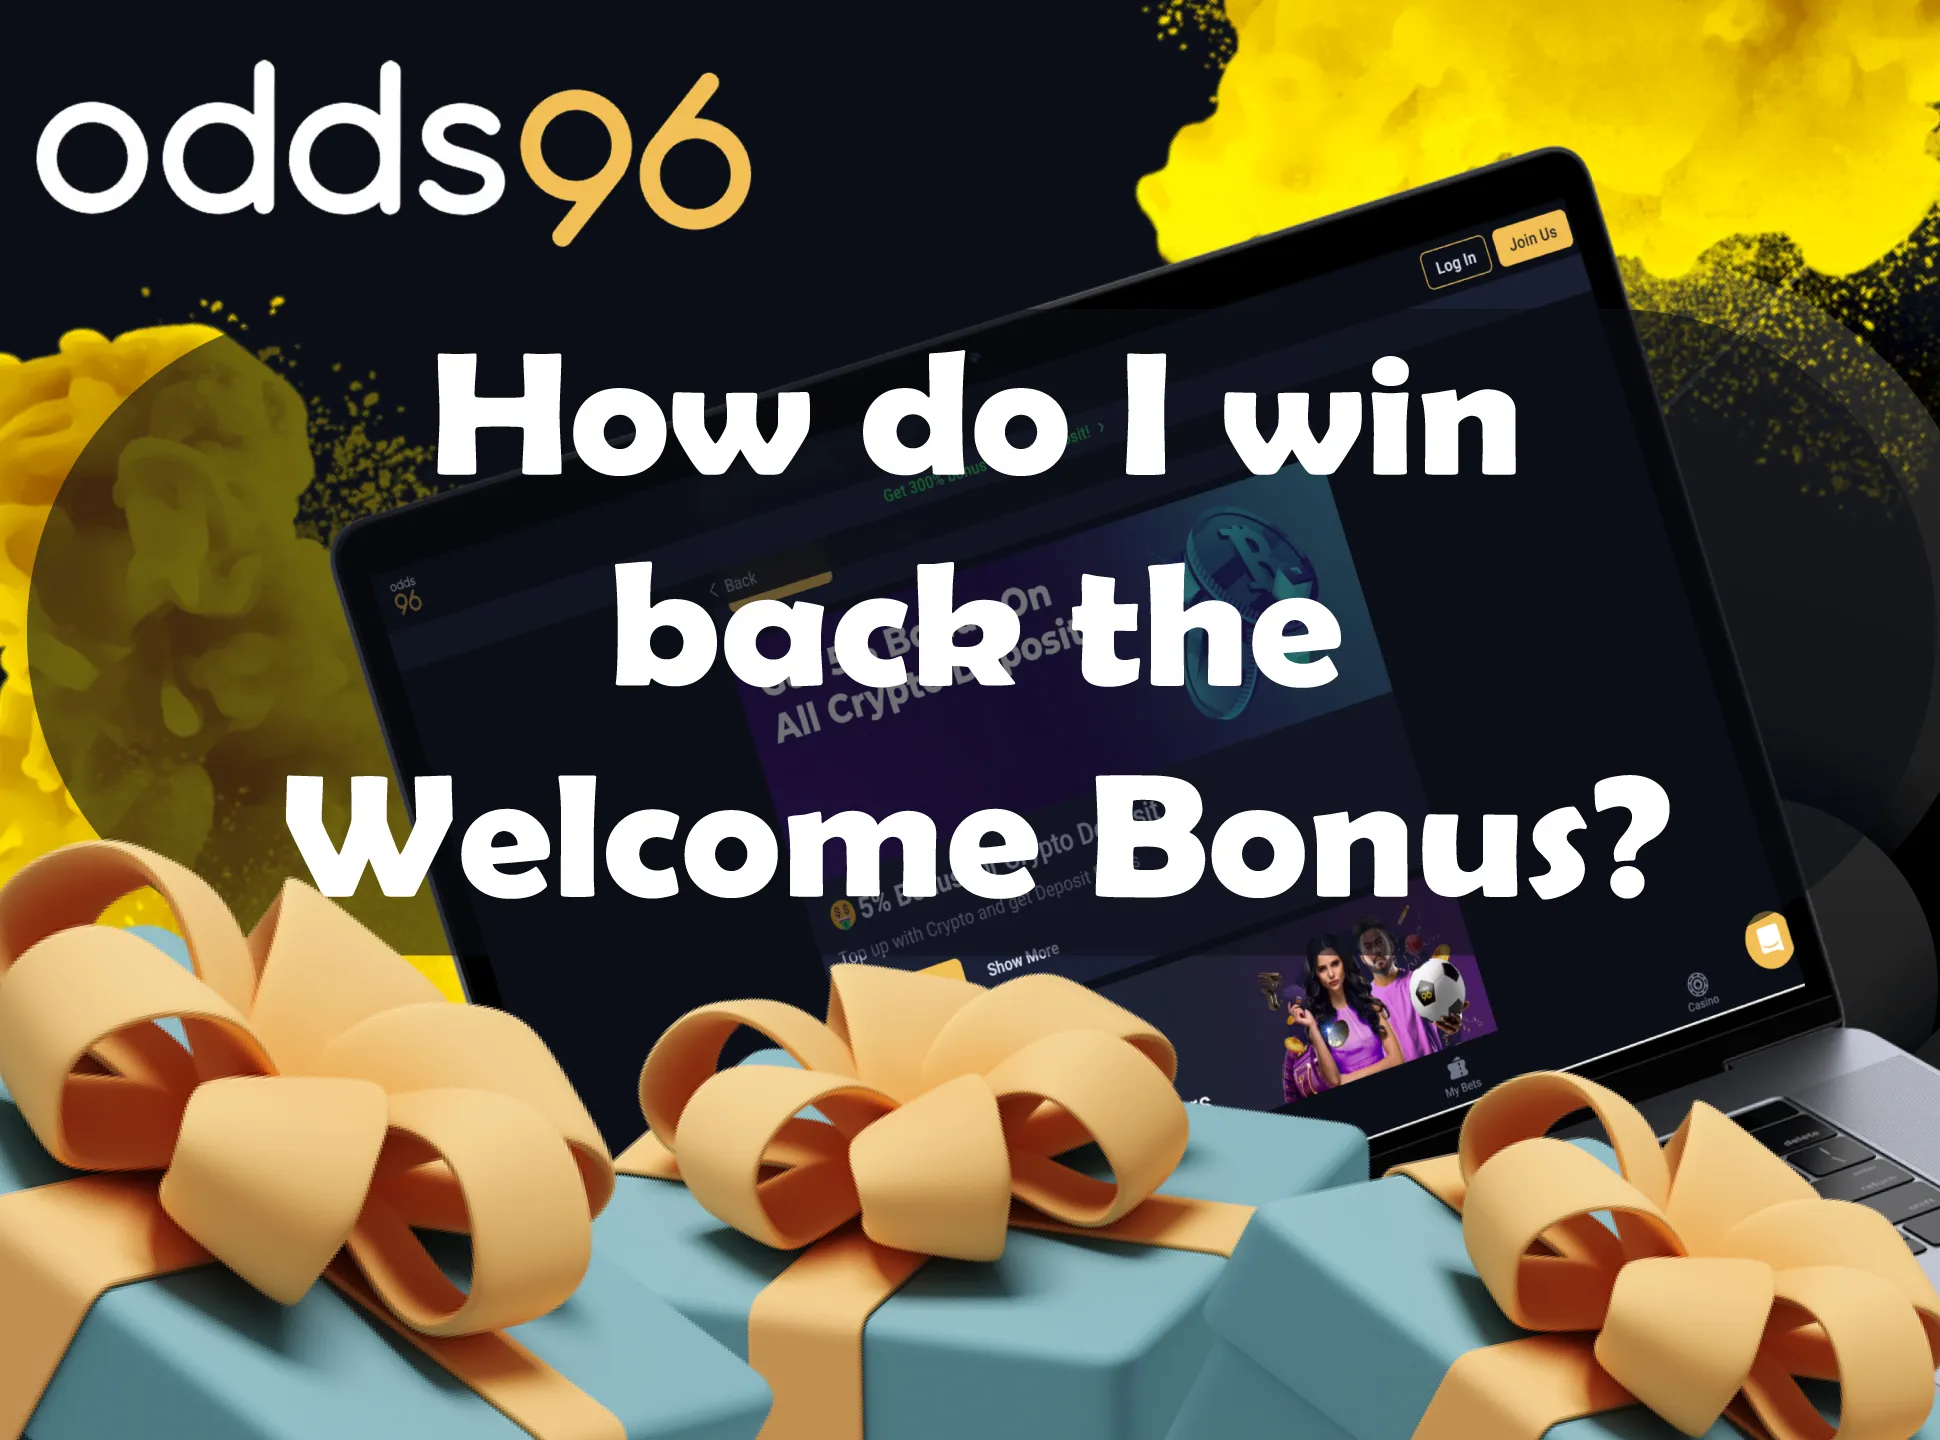 Make best and play casino for winning your Odds96 bonus.